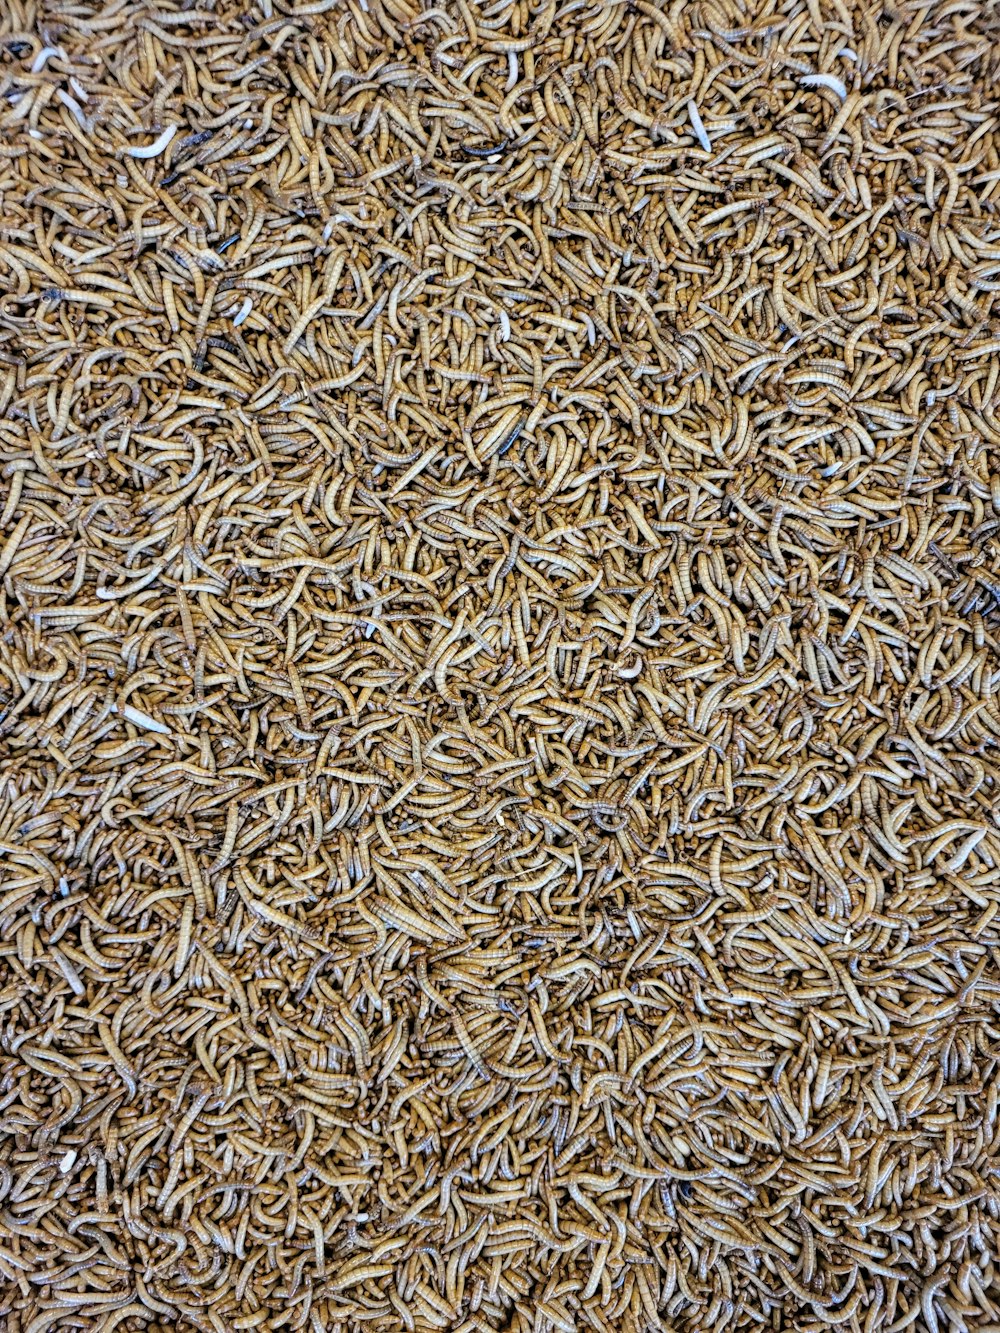 gros plan d’un tas de riz brun